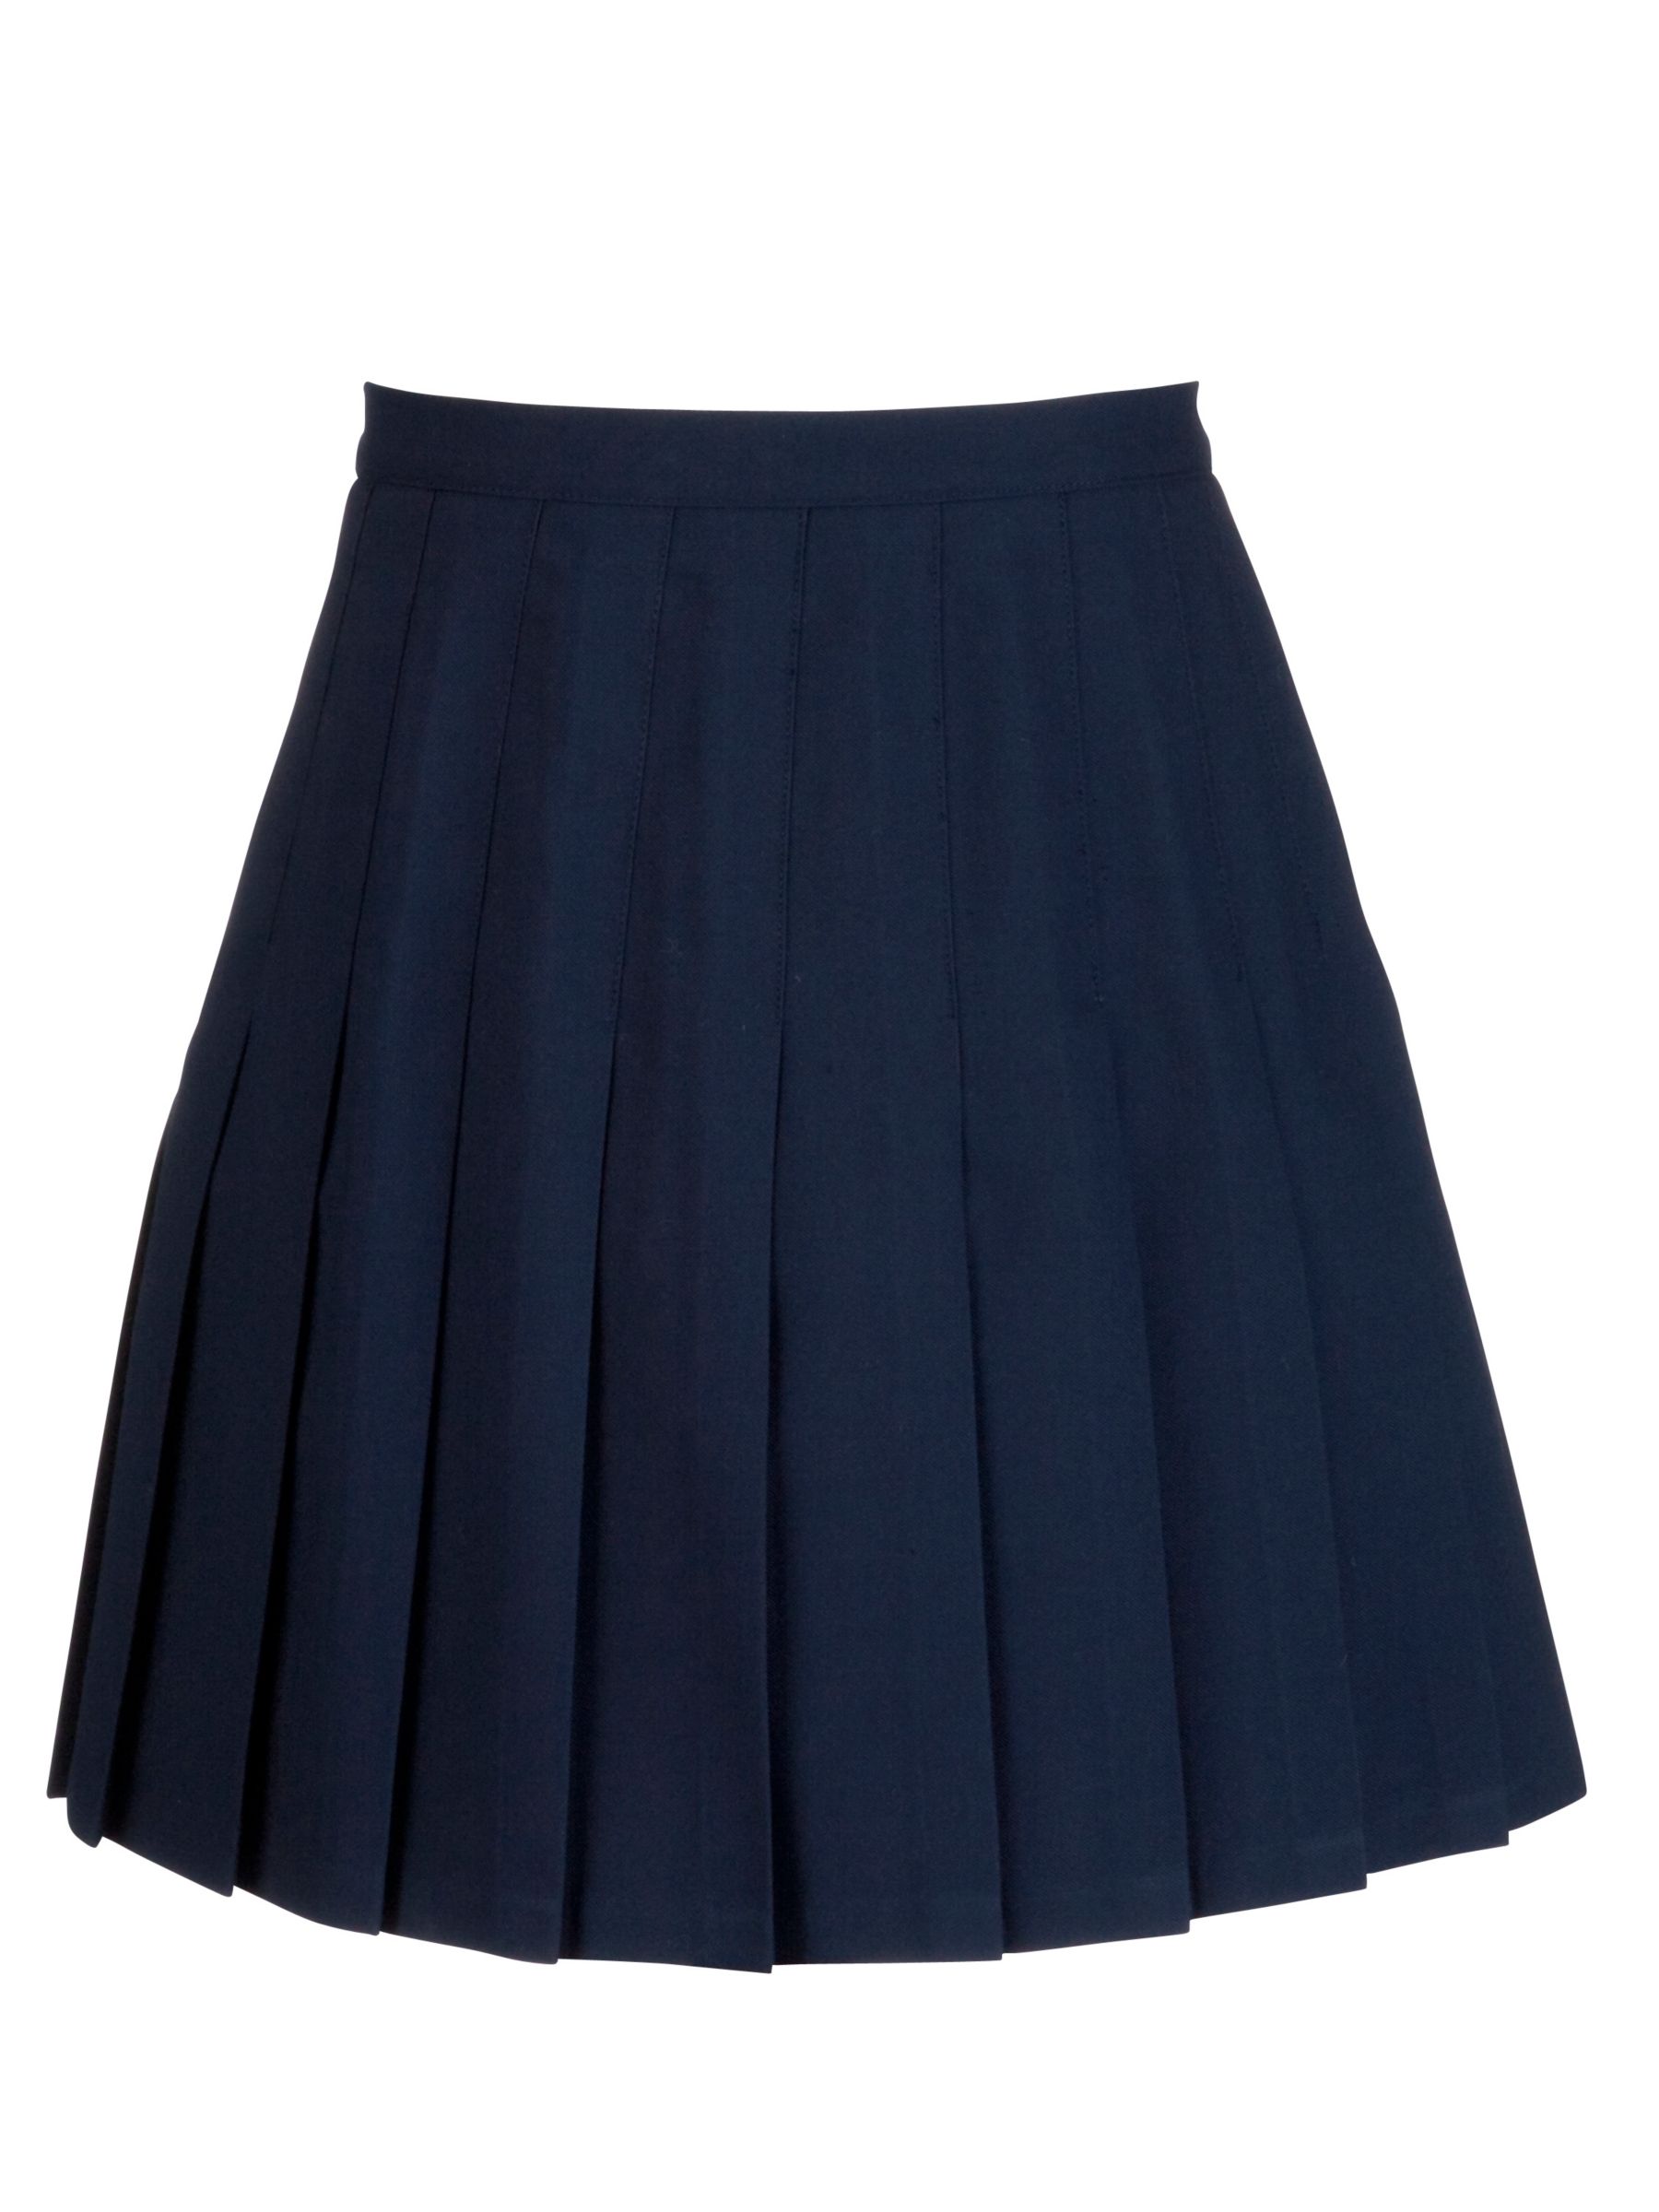 The Mountbatten School Girls Skirt, Navy at John Lewis